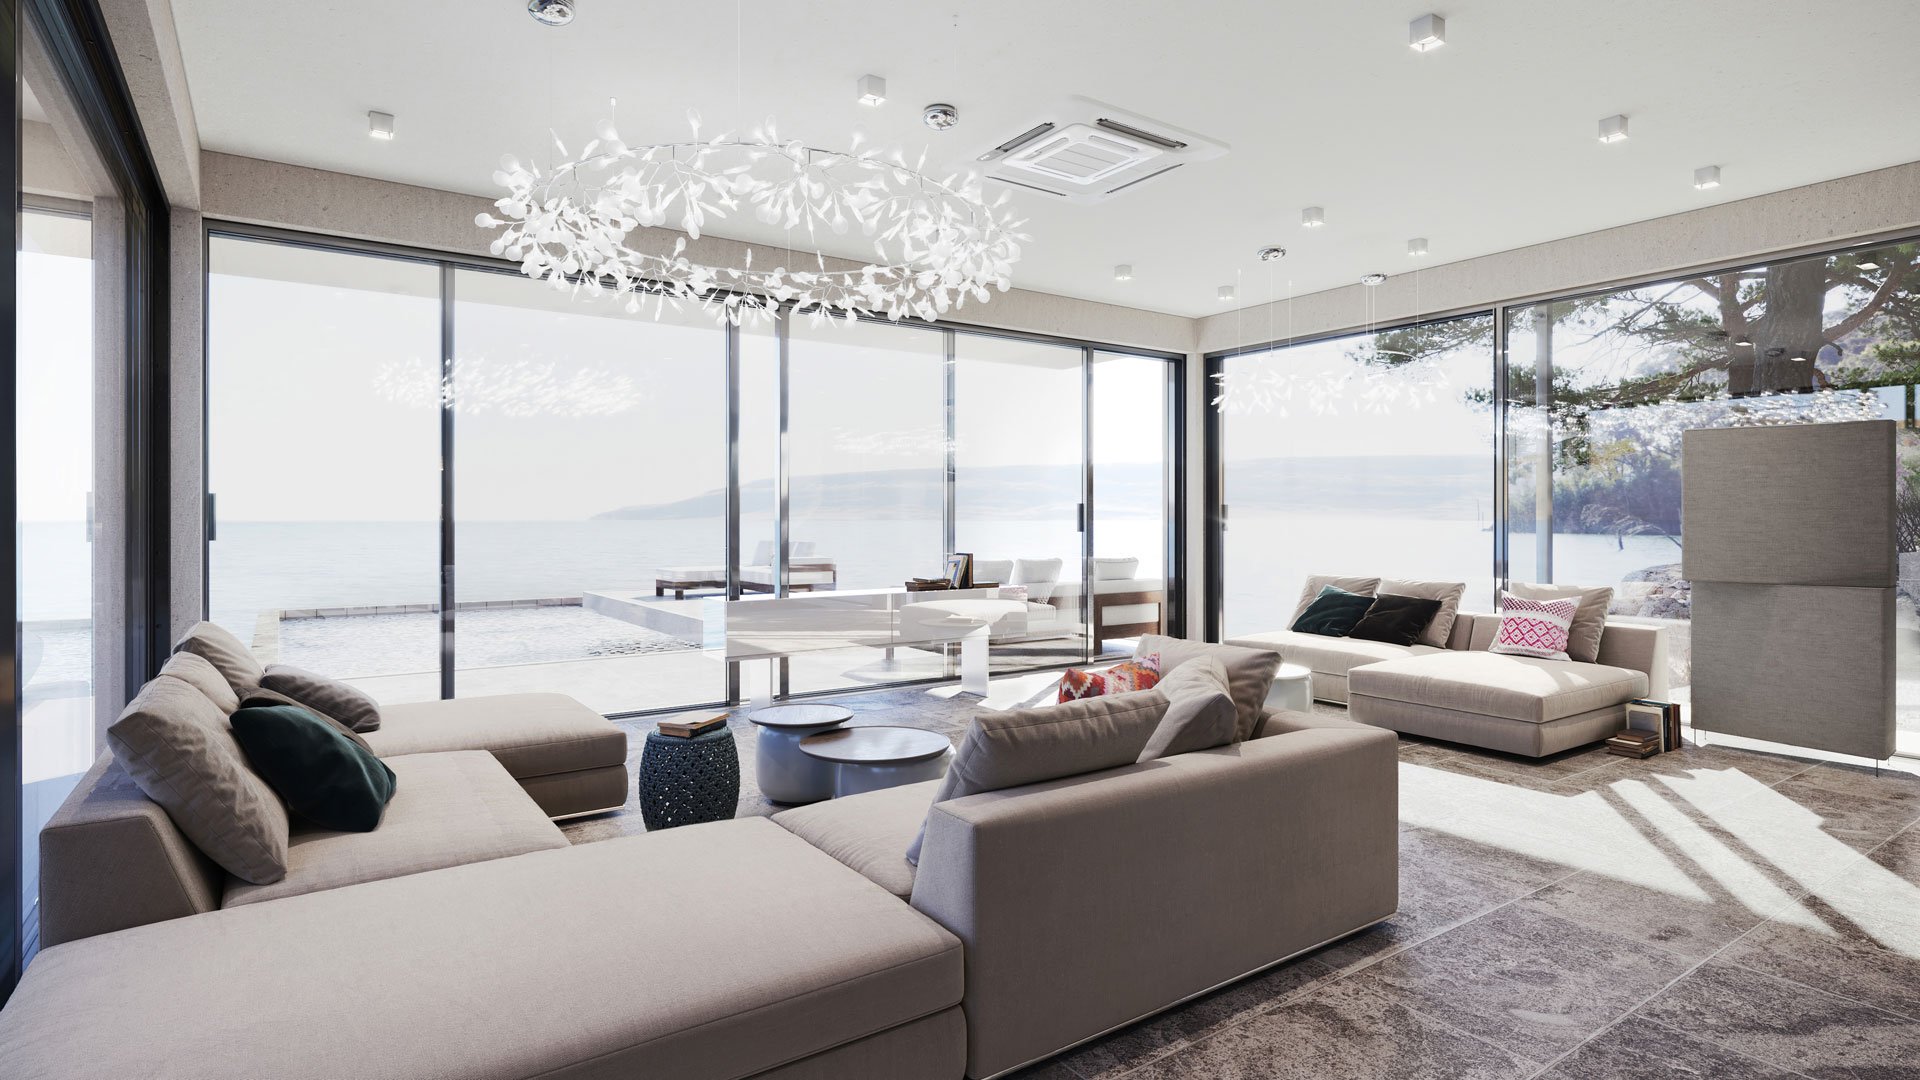 Interior Render for a Living Room - Ronen Bekerman - 6D